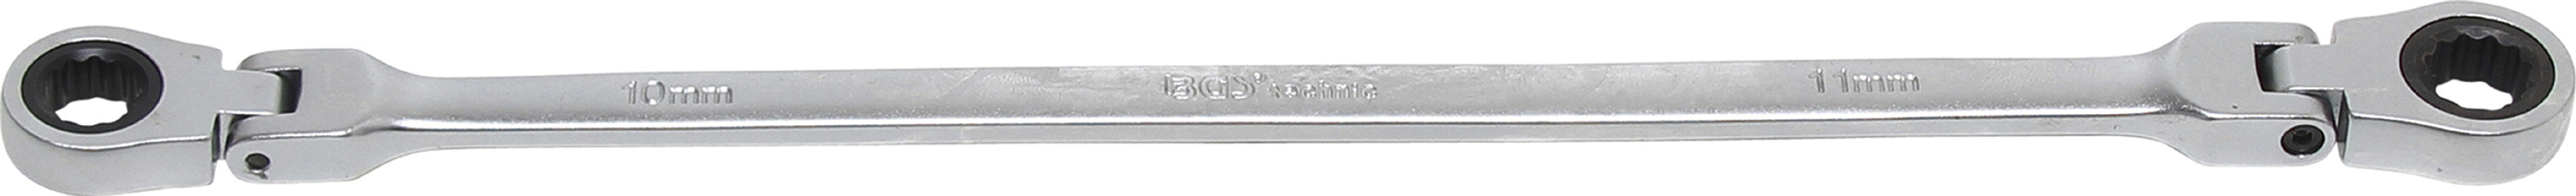 BGS 1541-10x11 Cheie inelara cu clichet dublă, articulată 10 x 11 mm